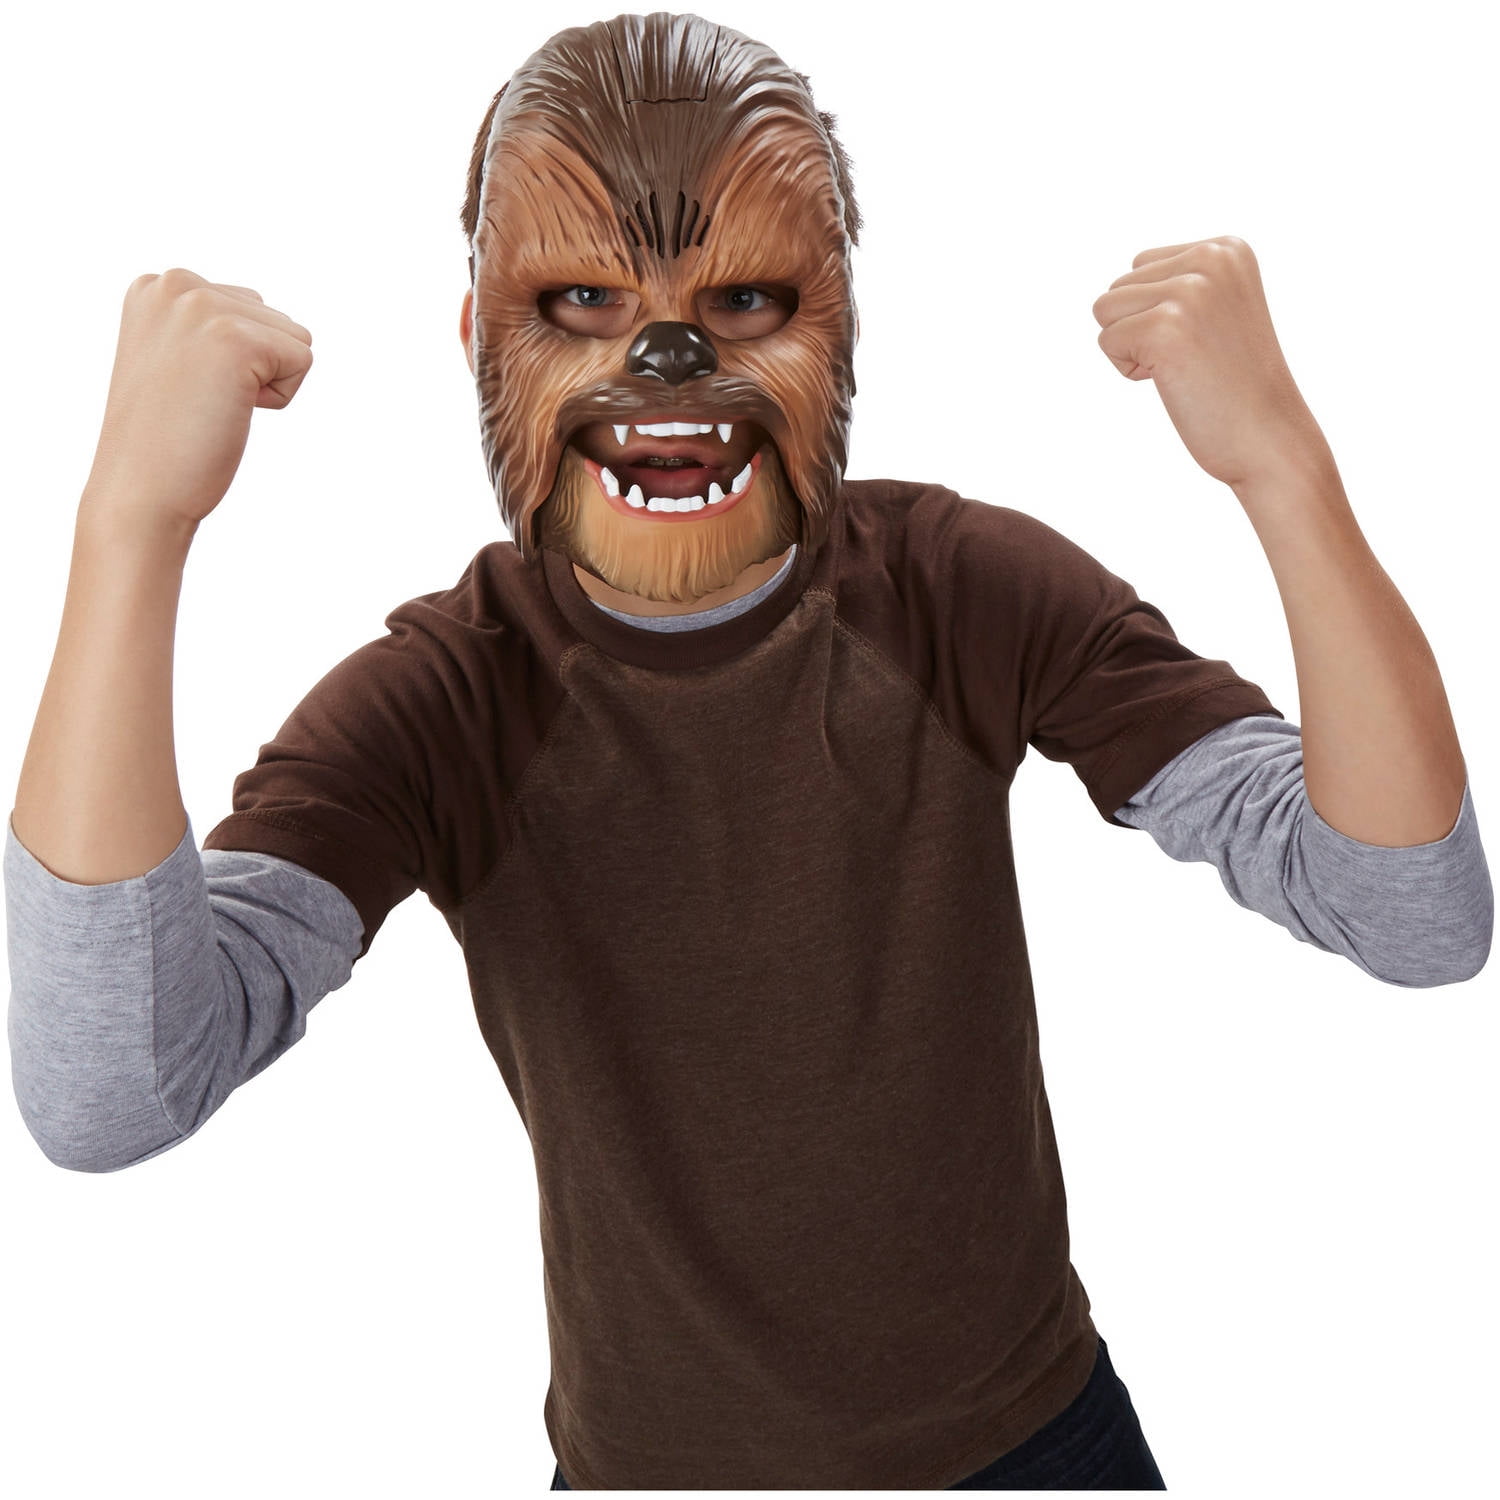 Wars The Force Awakens Chewbacca Electronic - Walmart.com